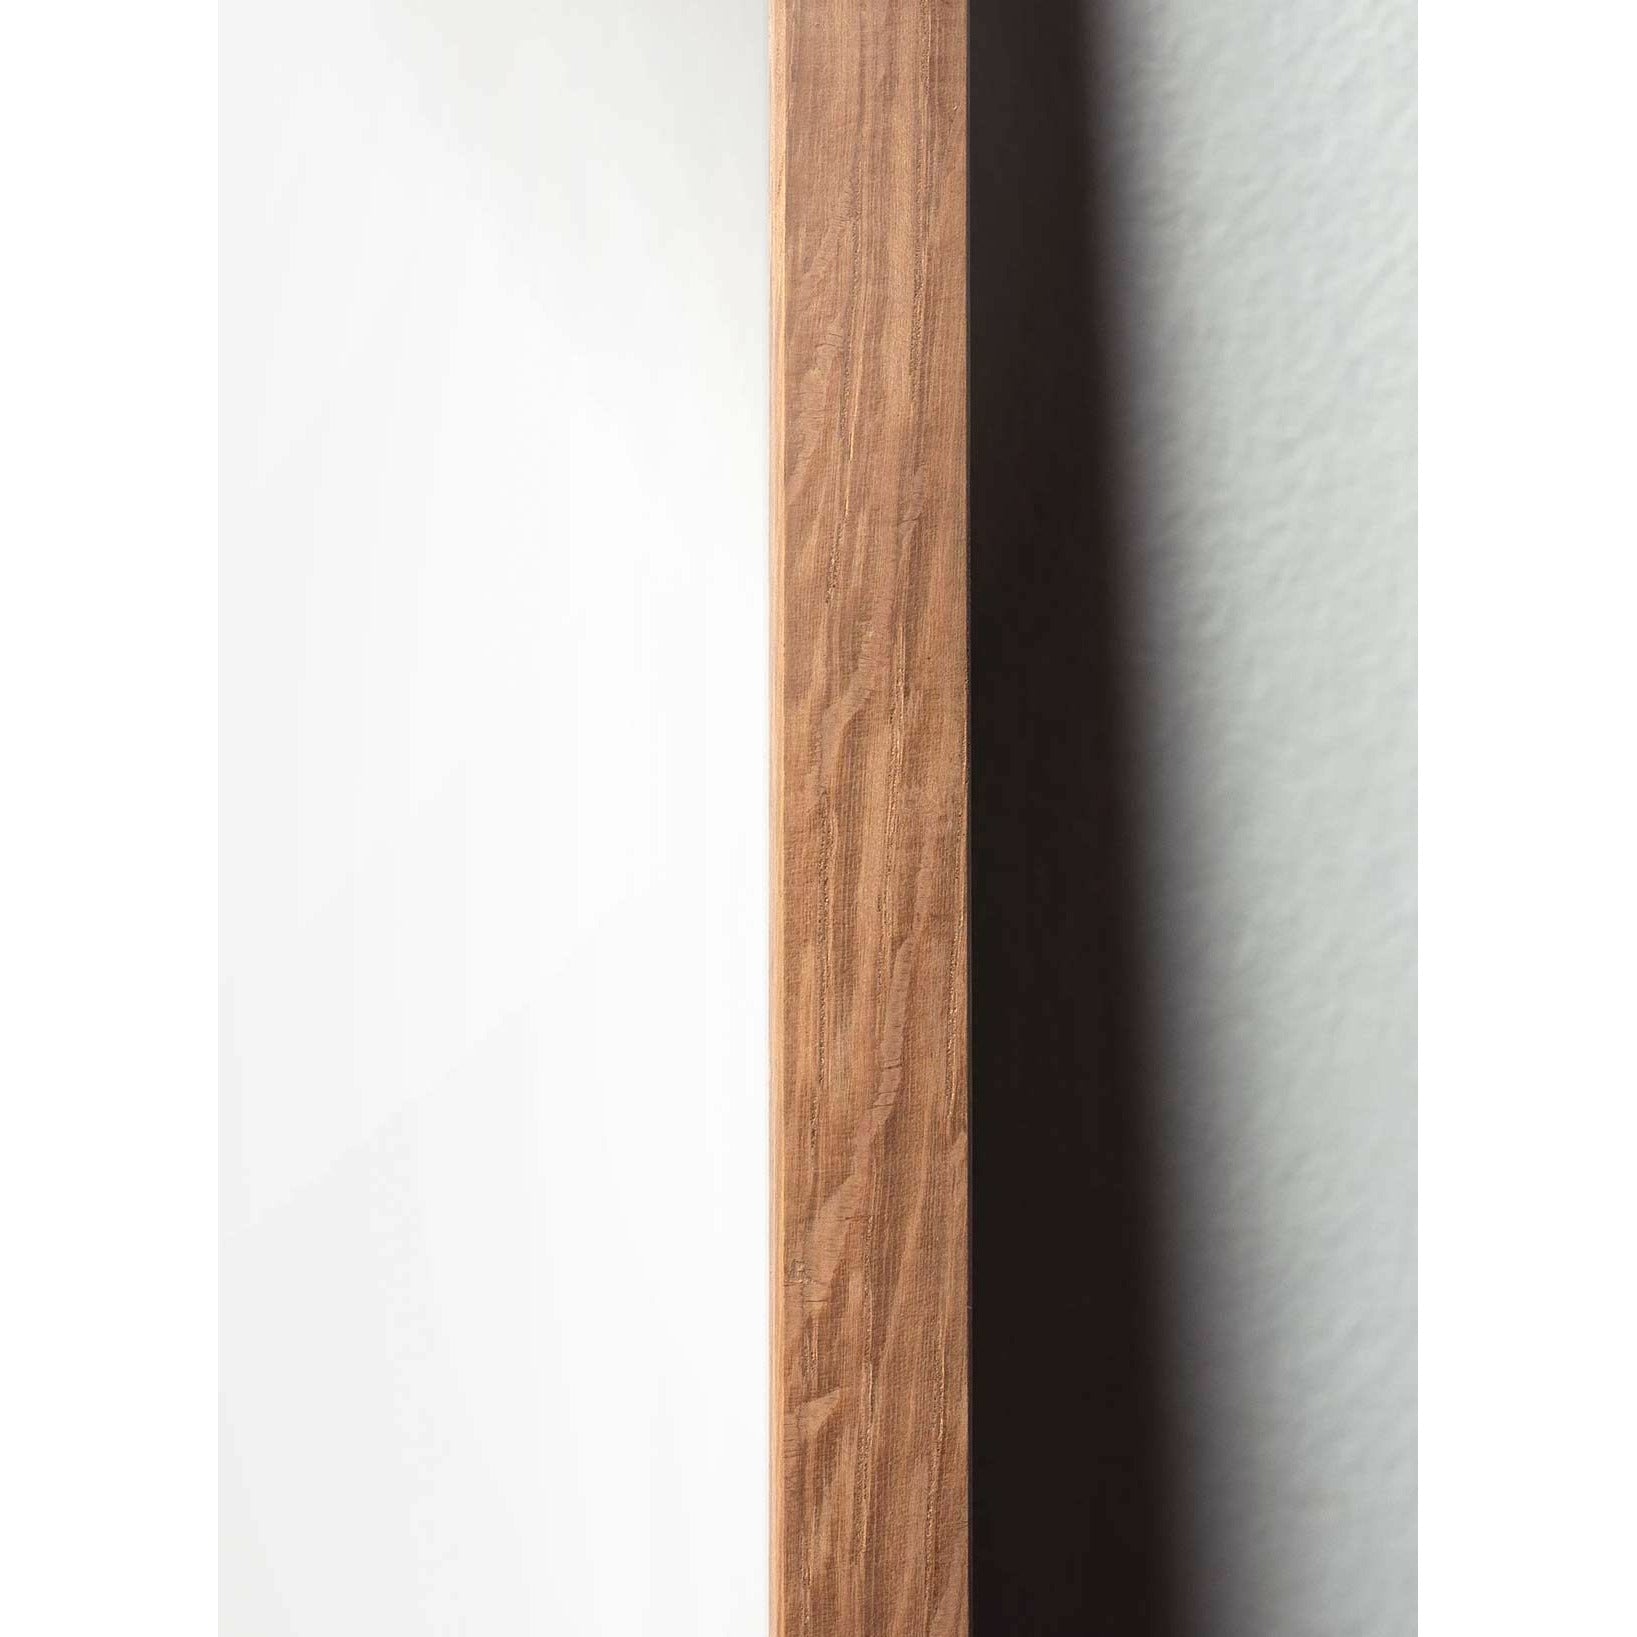 Póster de línea Swan de creación, marco hecho de madera clara 50x70 cm, fondo blanco